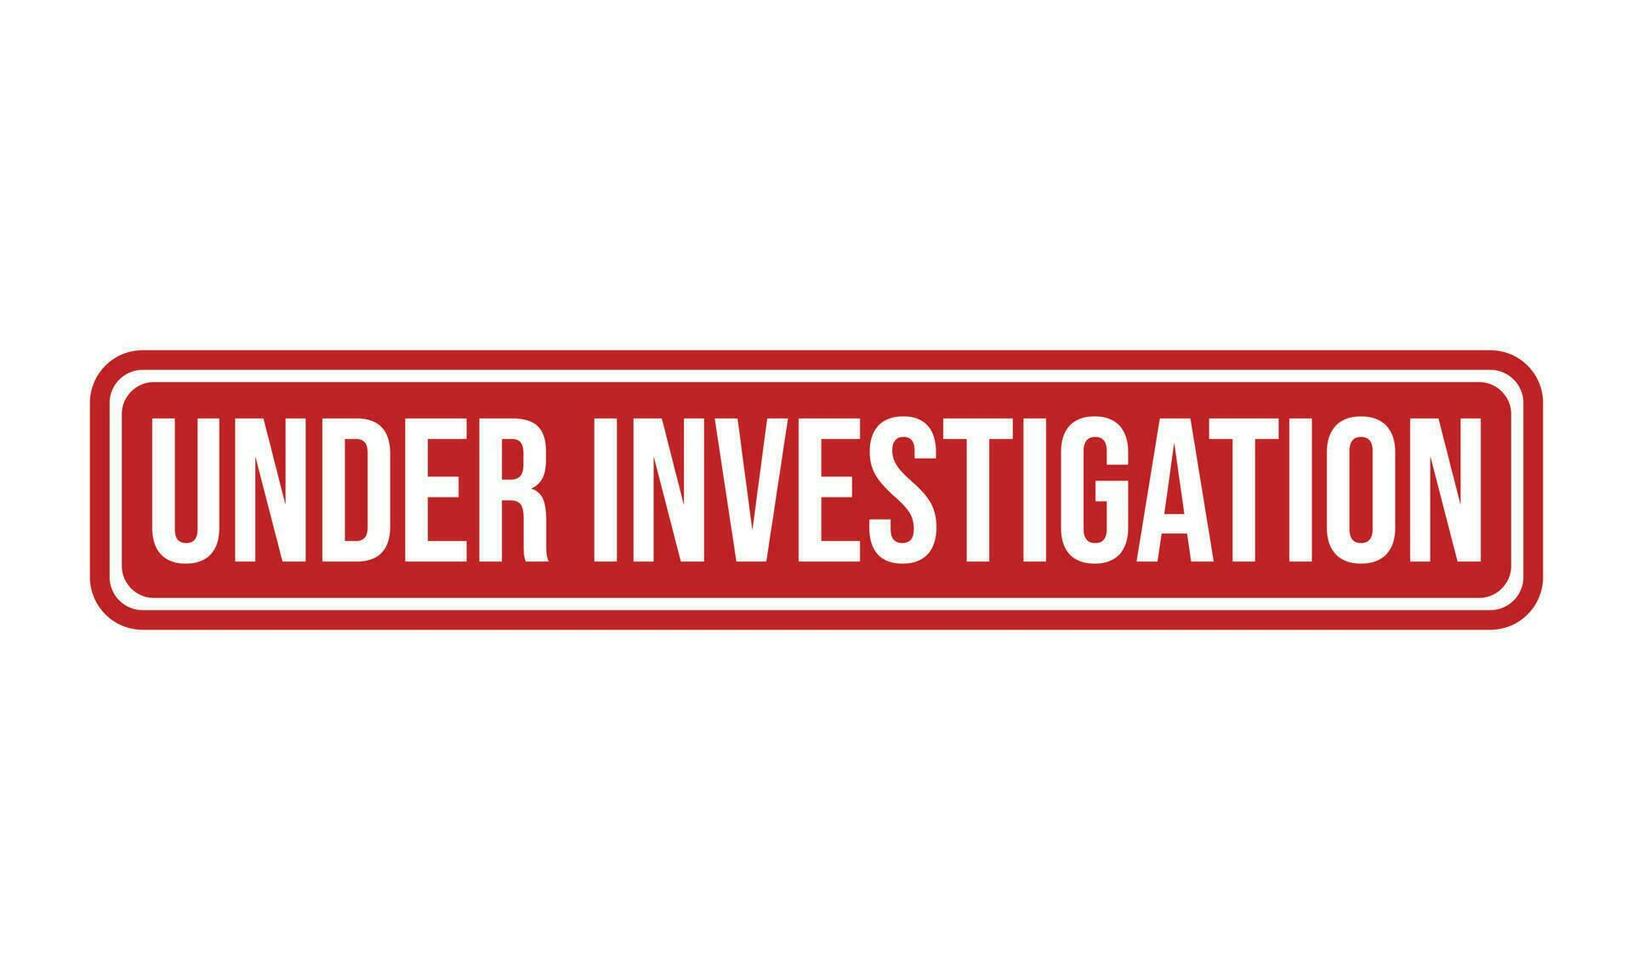 Under Investigation Rubber Stamp Seal Vector